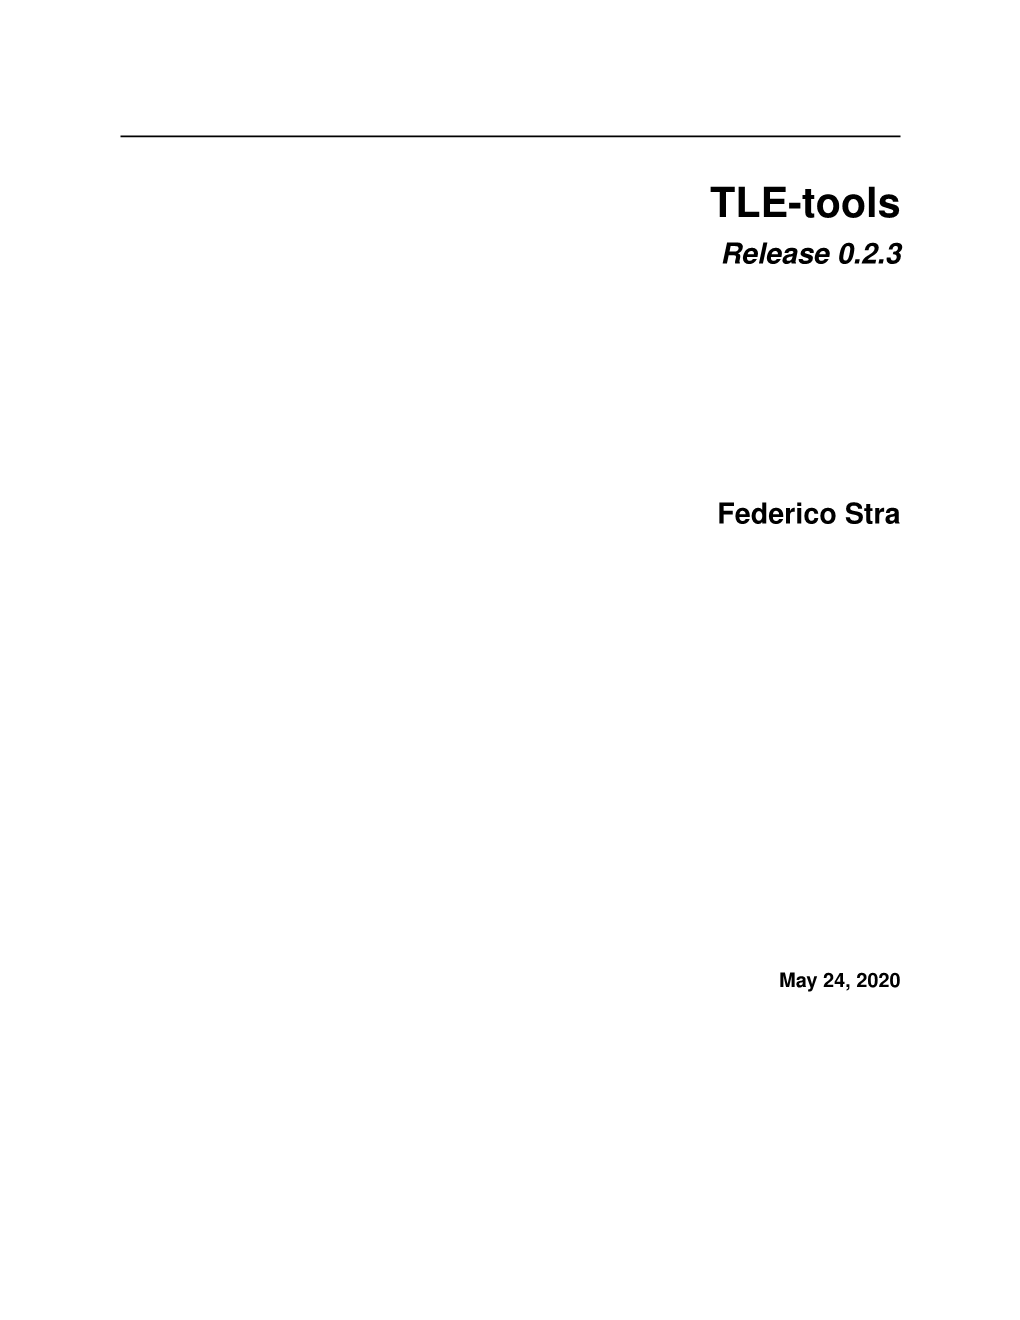 TLE-Tools's Documentation!